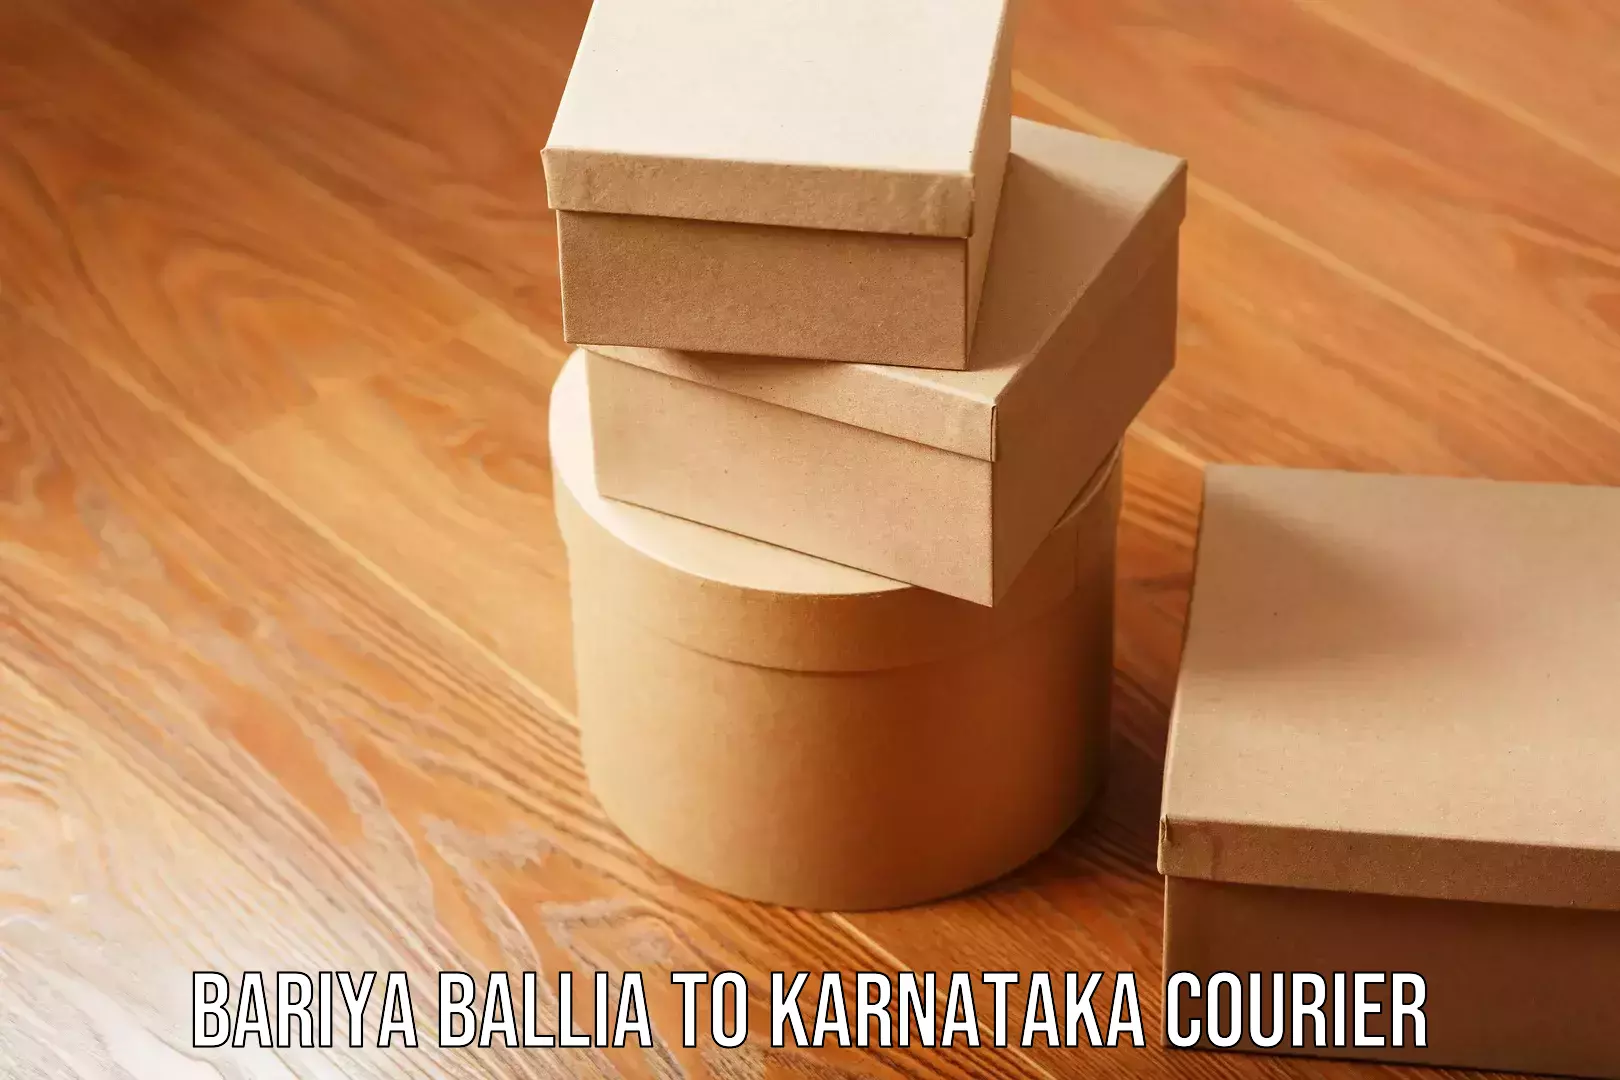 Cargo delivery service Bariya Ballia to Karnataka